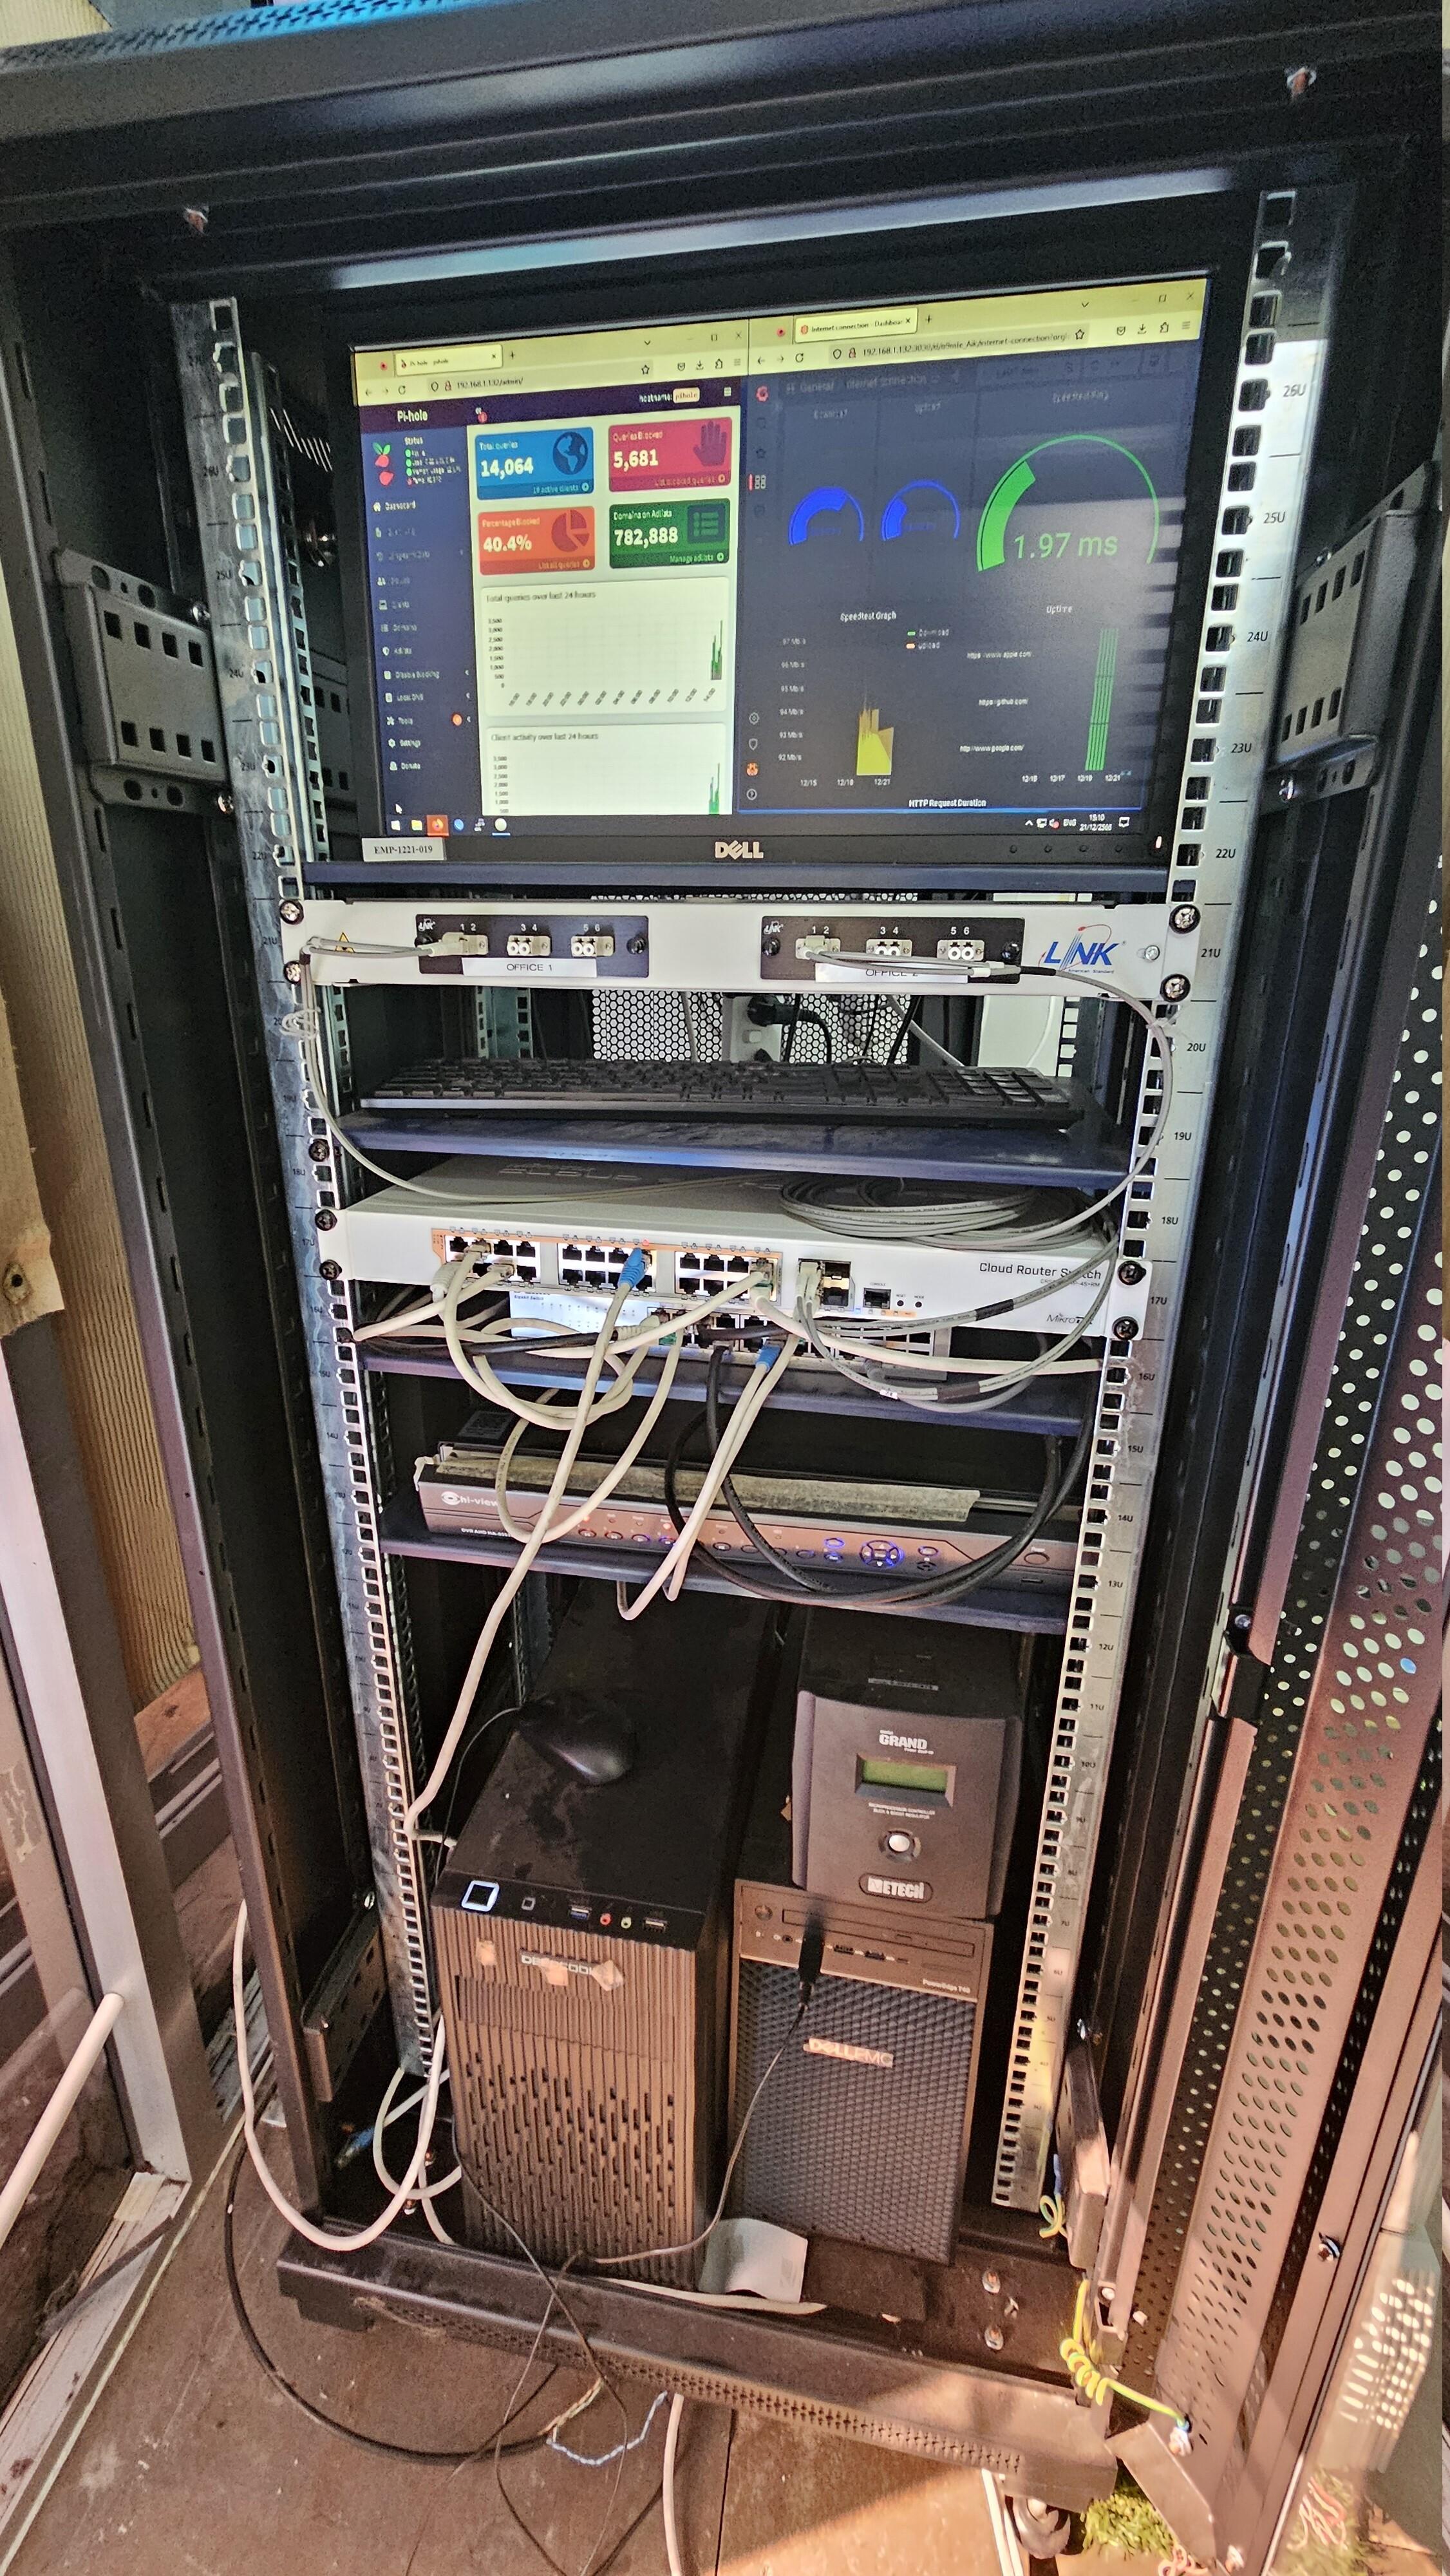 Main Server Rack